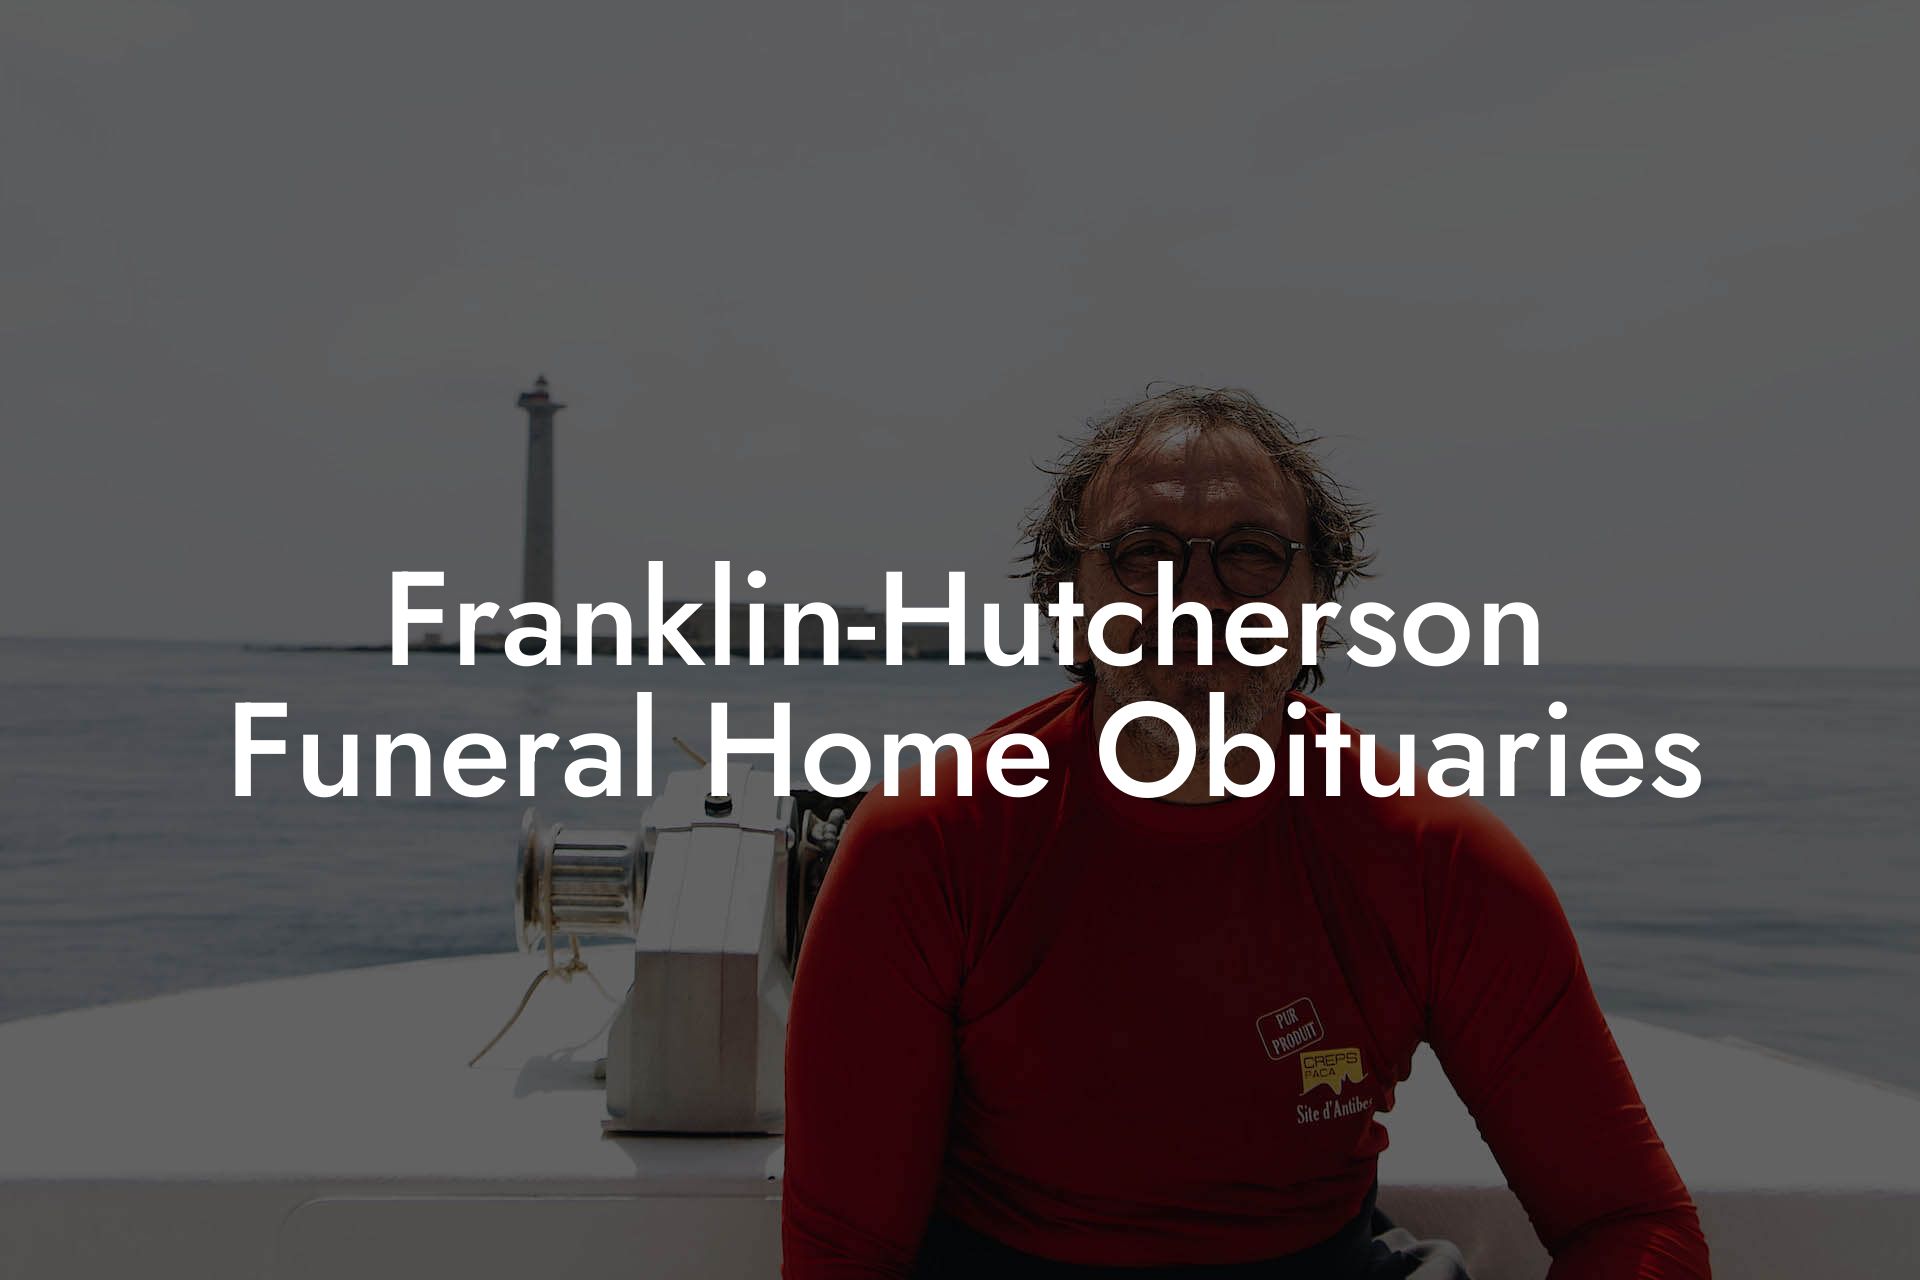 Franklin-Hutcherson Funeral Home Obituaries